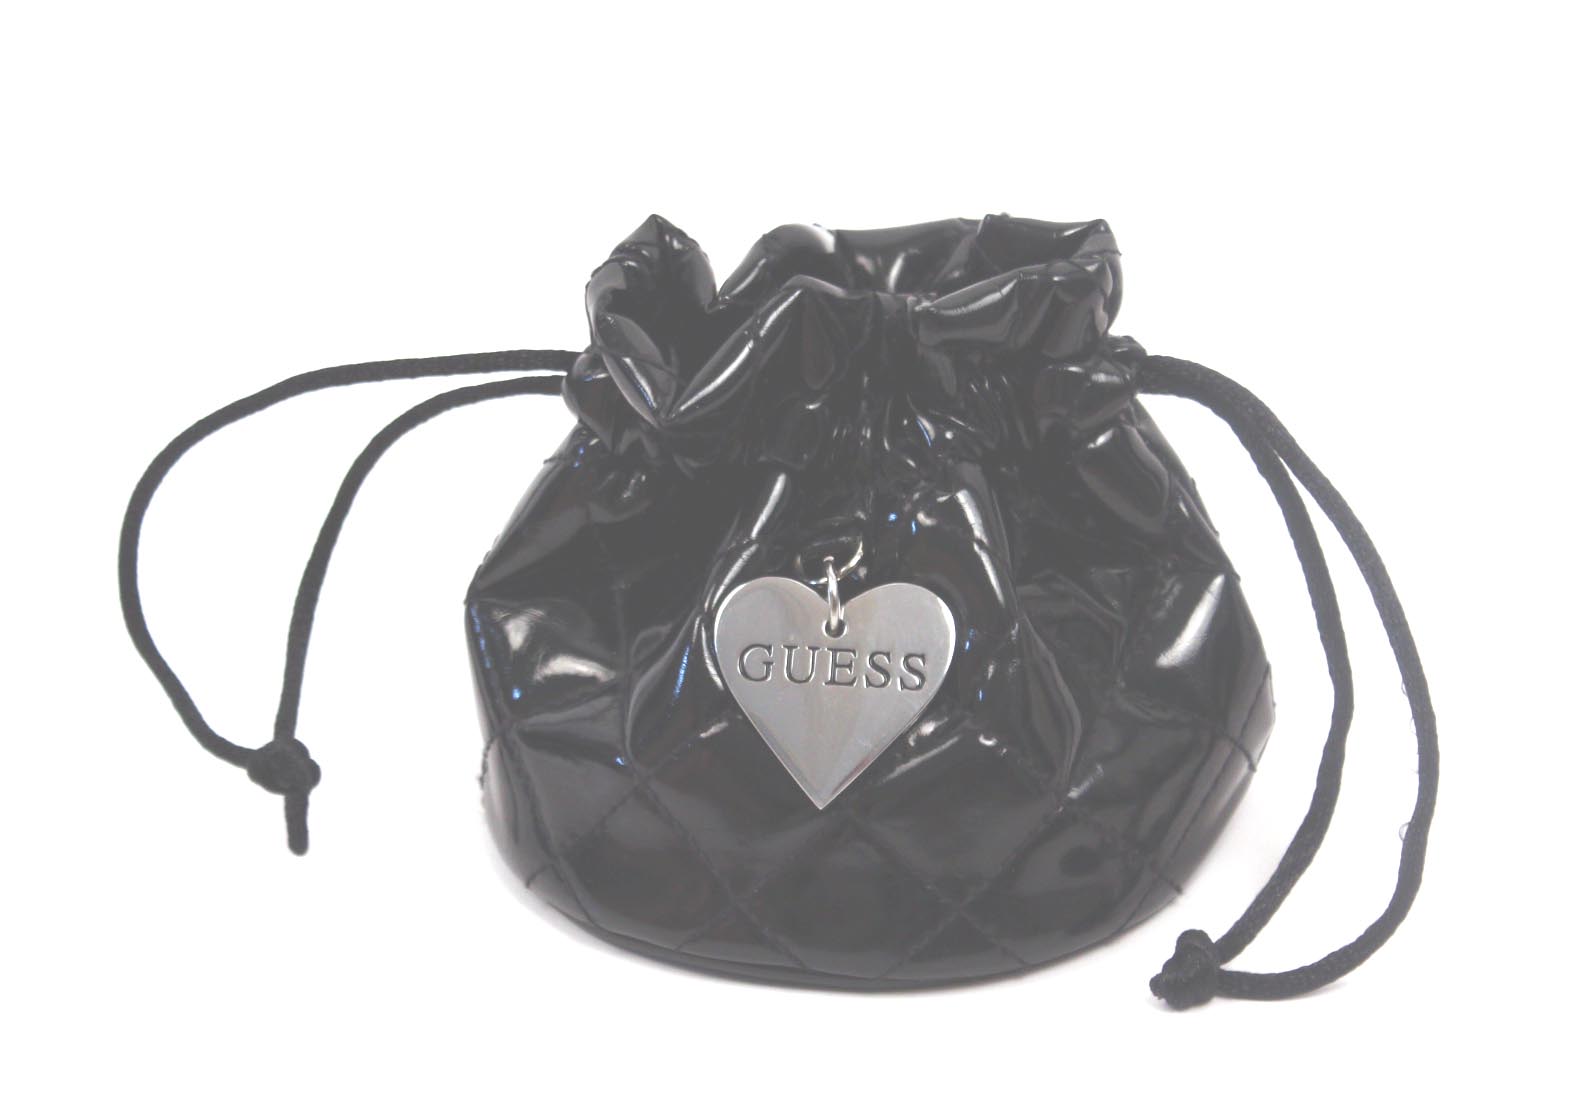 Guaranteed Original Guess Agata Shine Women's Drawstring Bag - Black